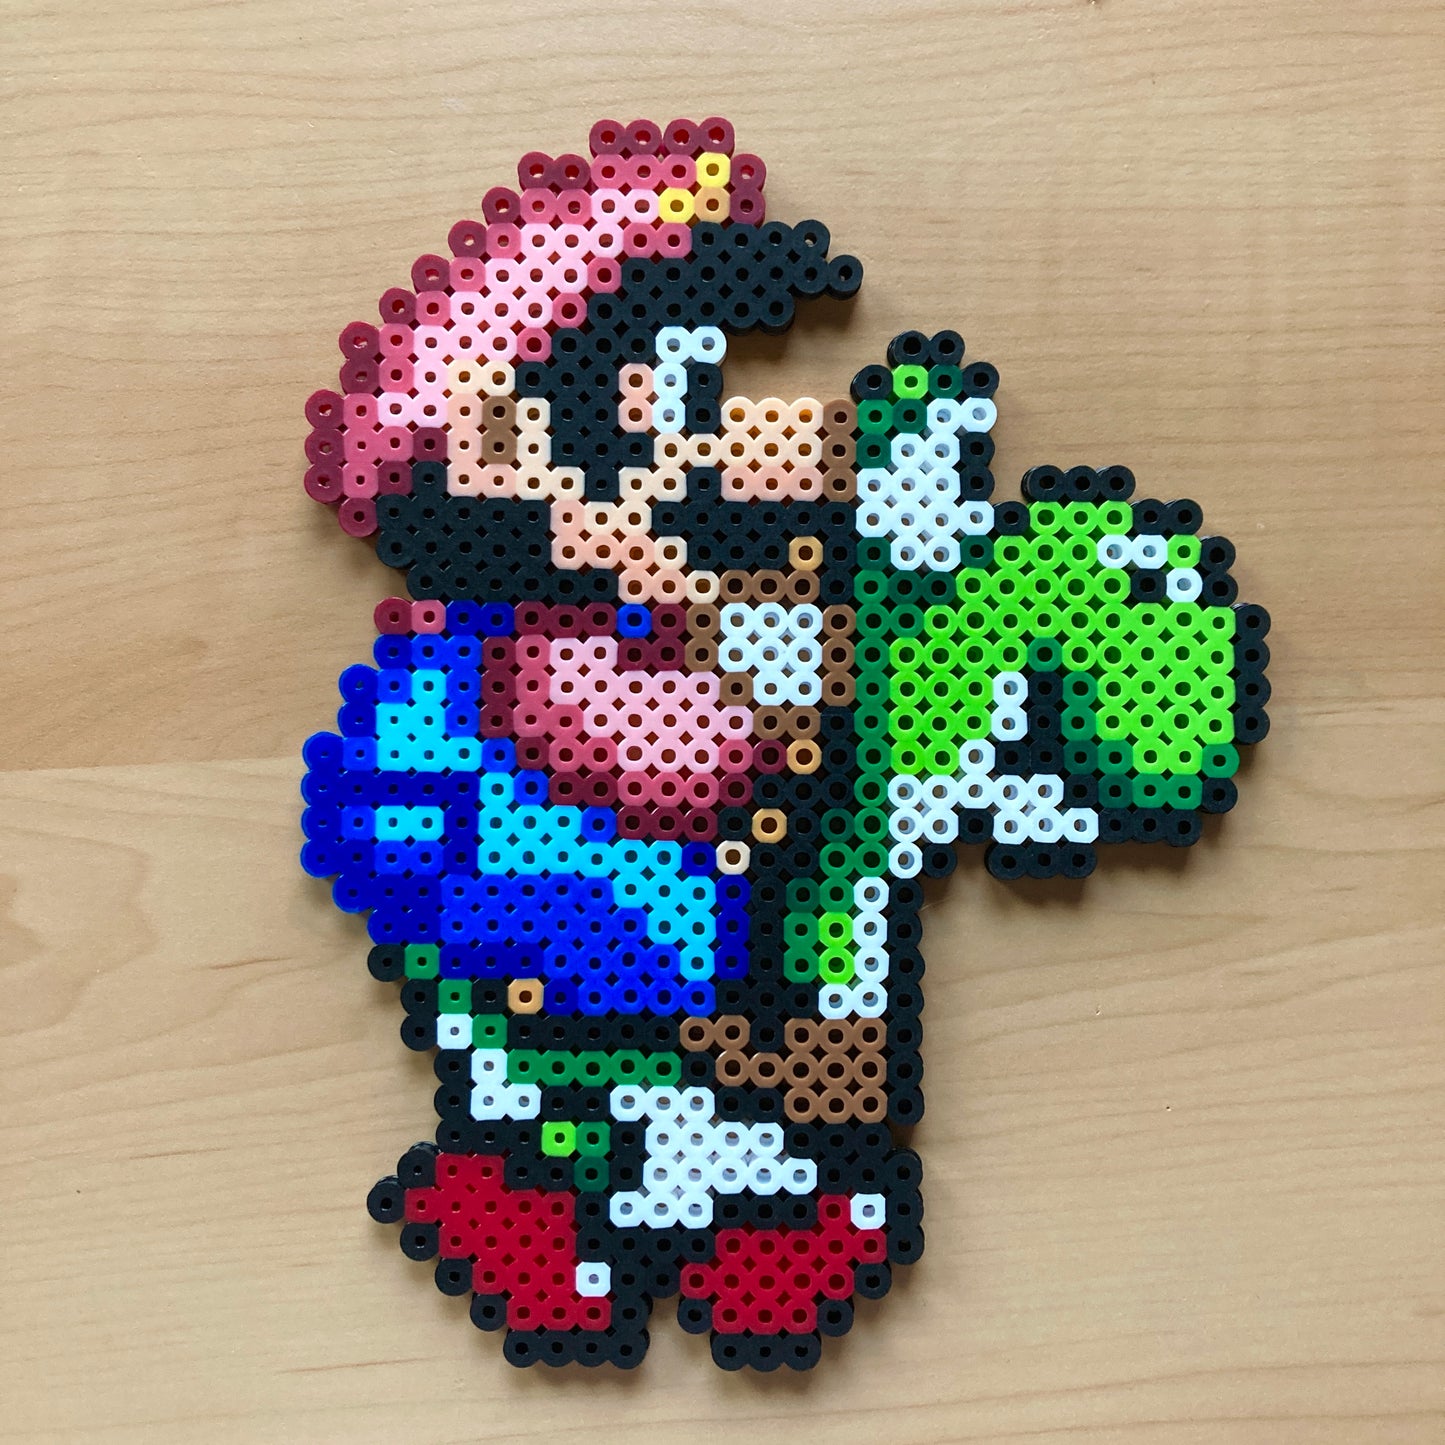 Mario and Yoshi (Super Mario World)